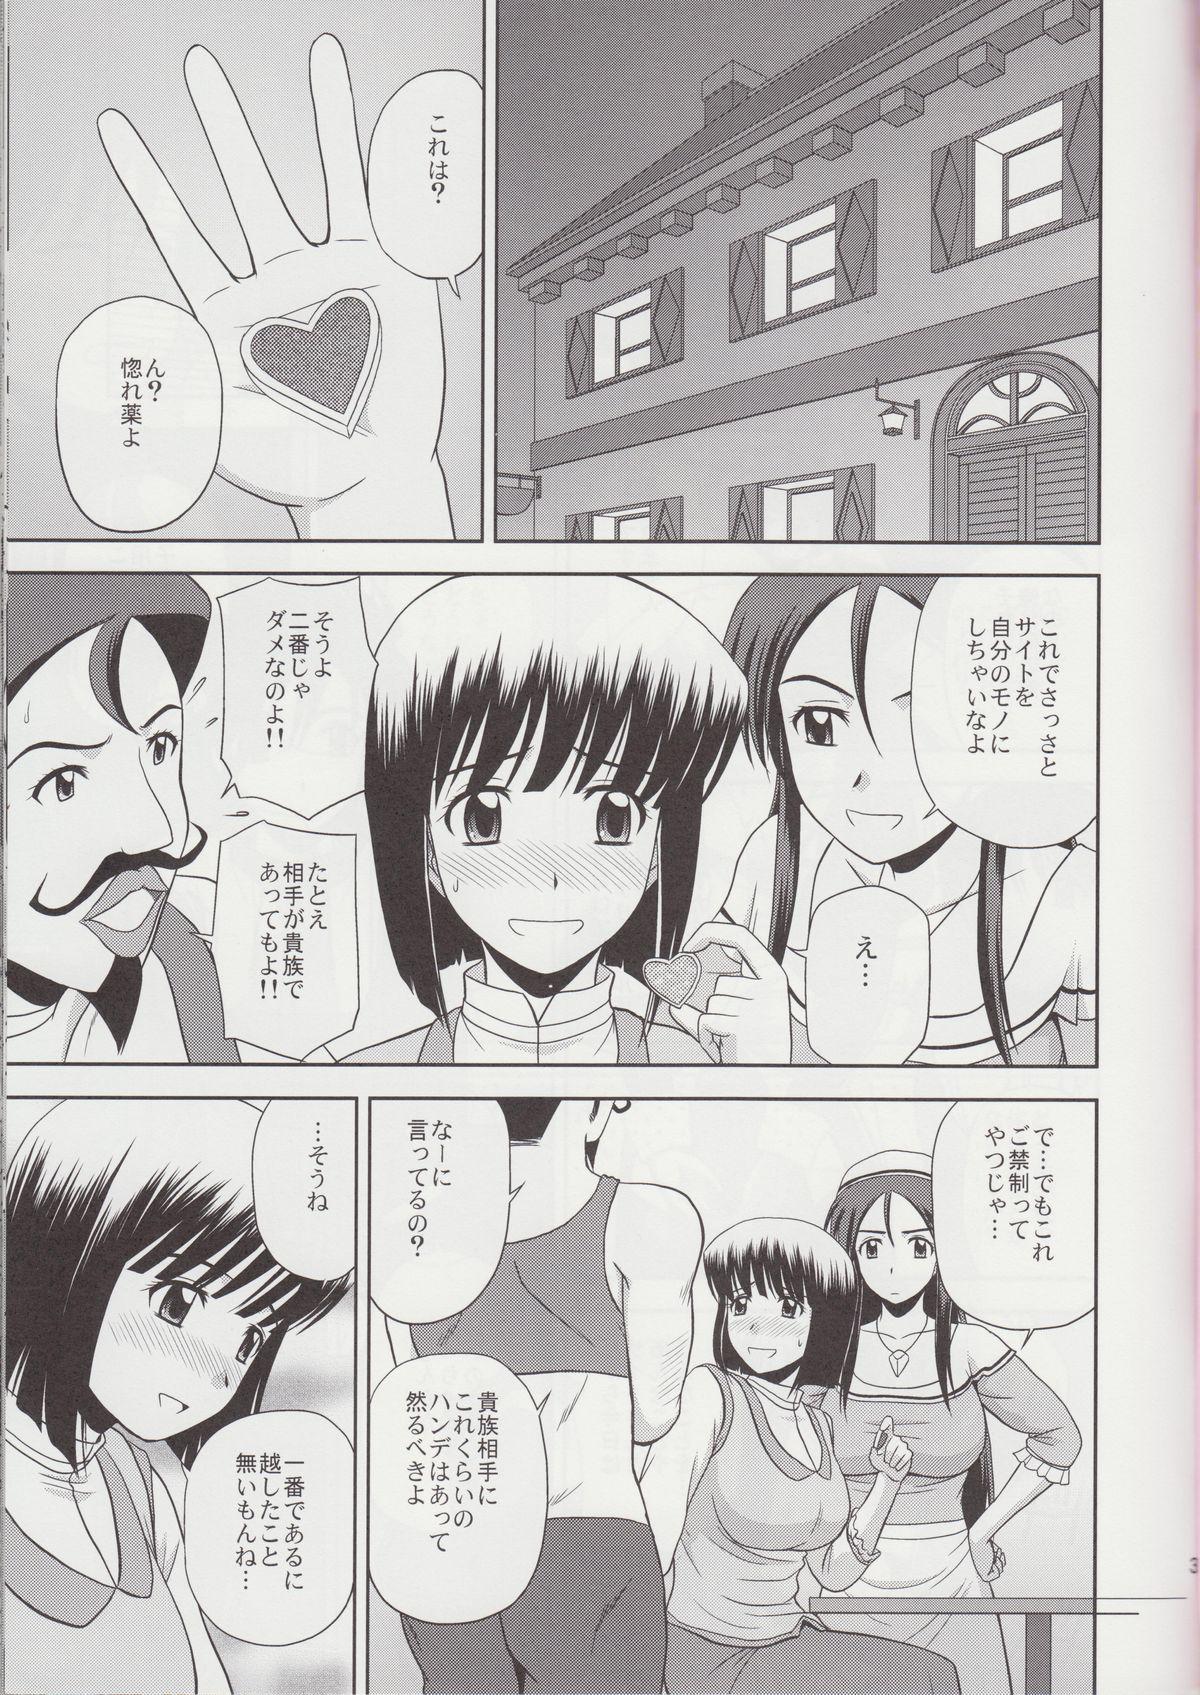 Star Le beau maitre 8 - Zero no tsukaima 18 Year Old - Page 4